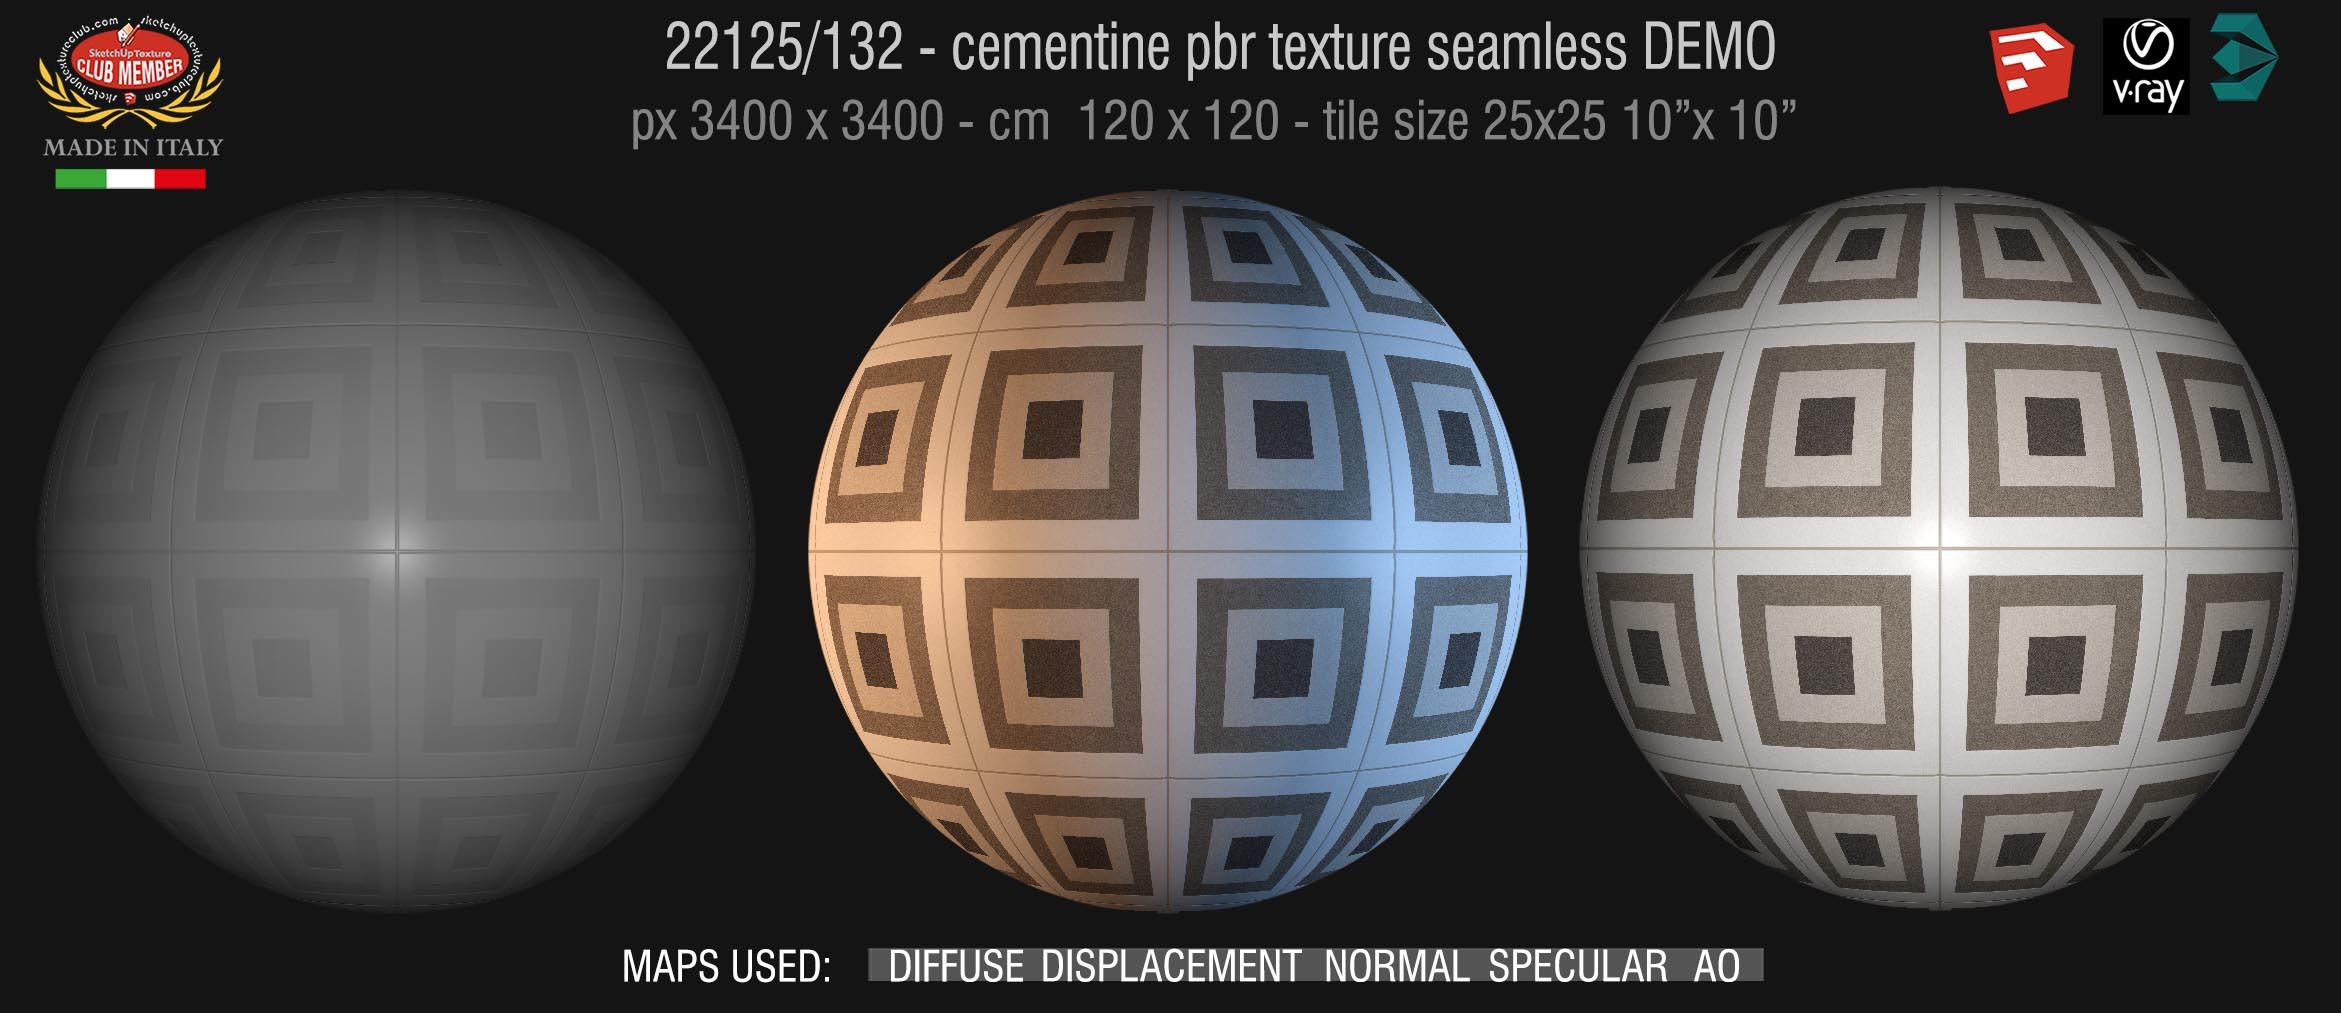 22125/132 cementine tiles Pbr seamless texture DEMO - porcelain stoneware cement effect